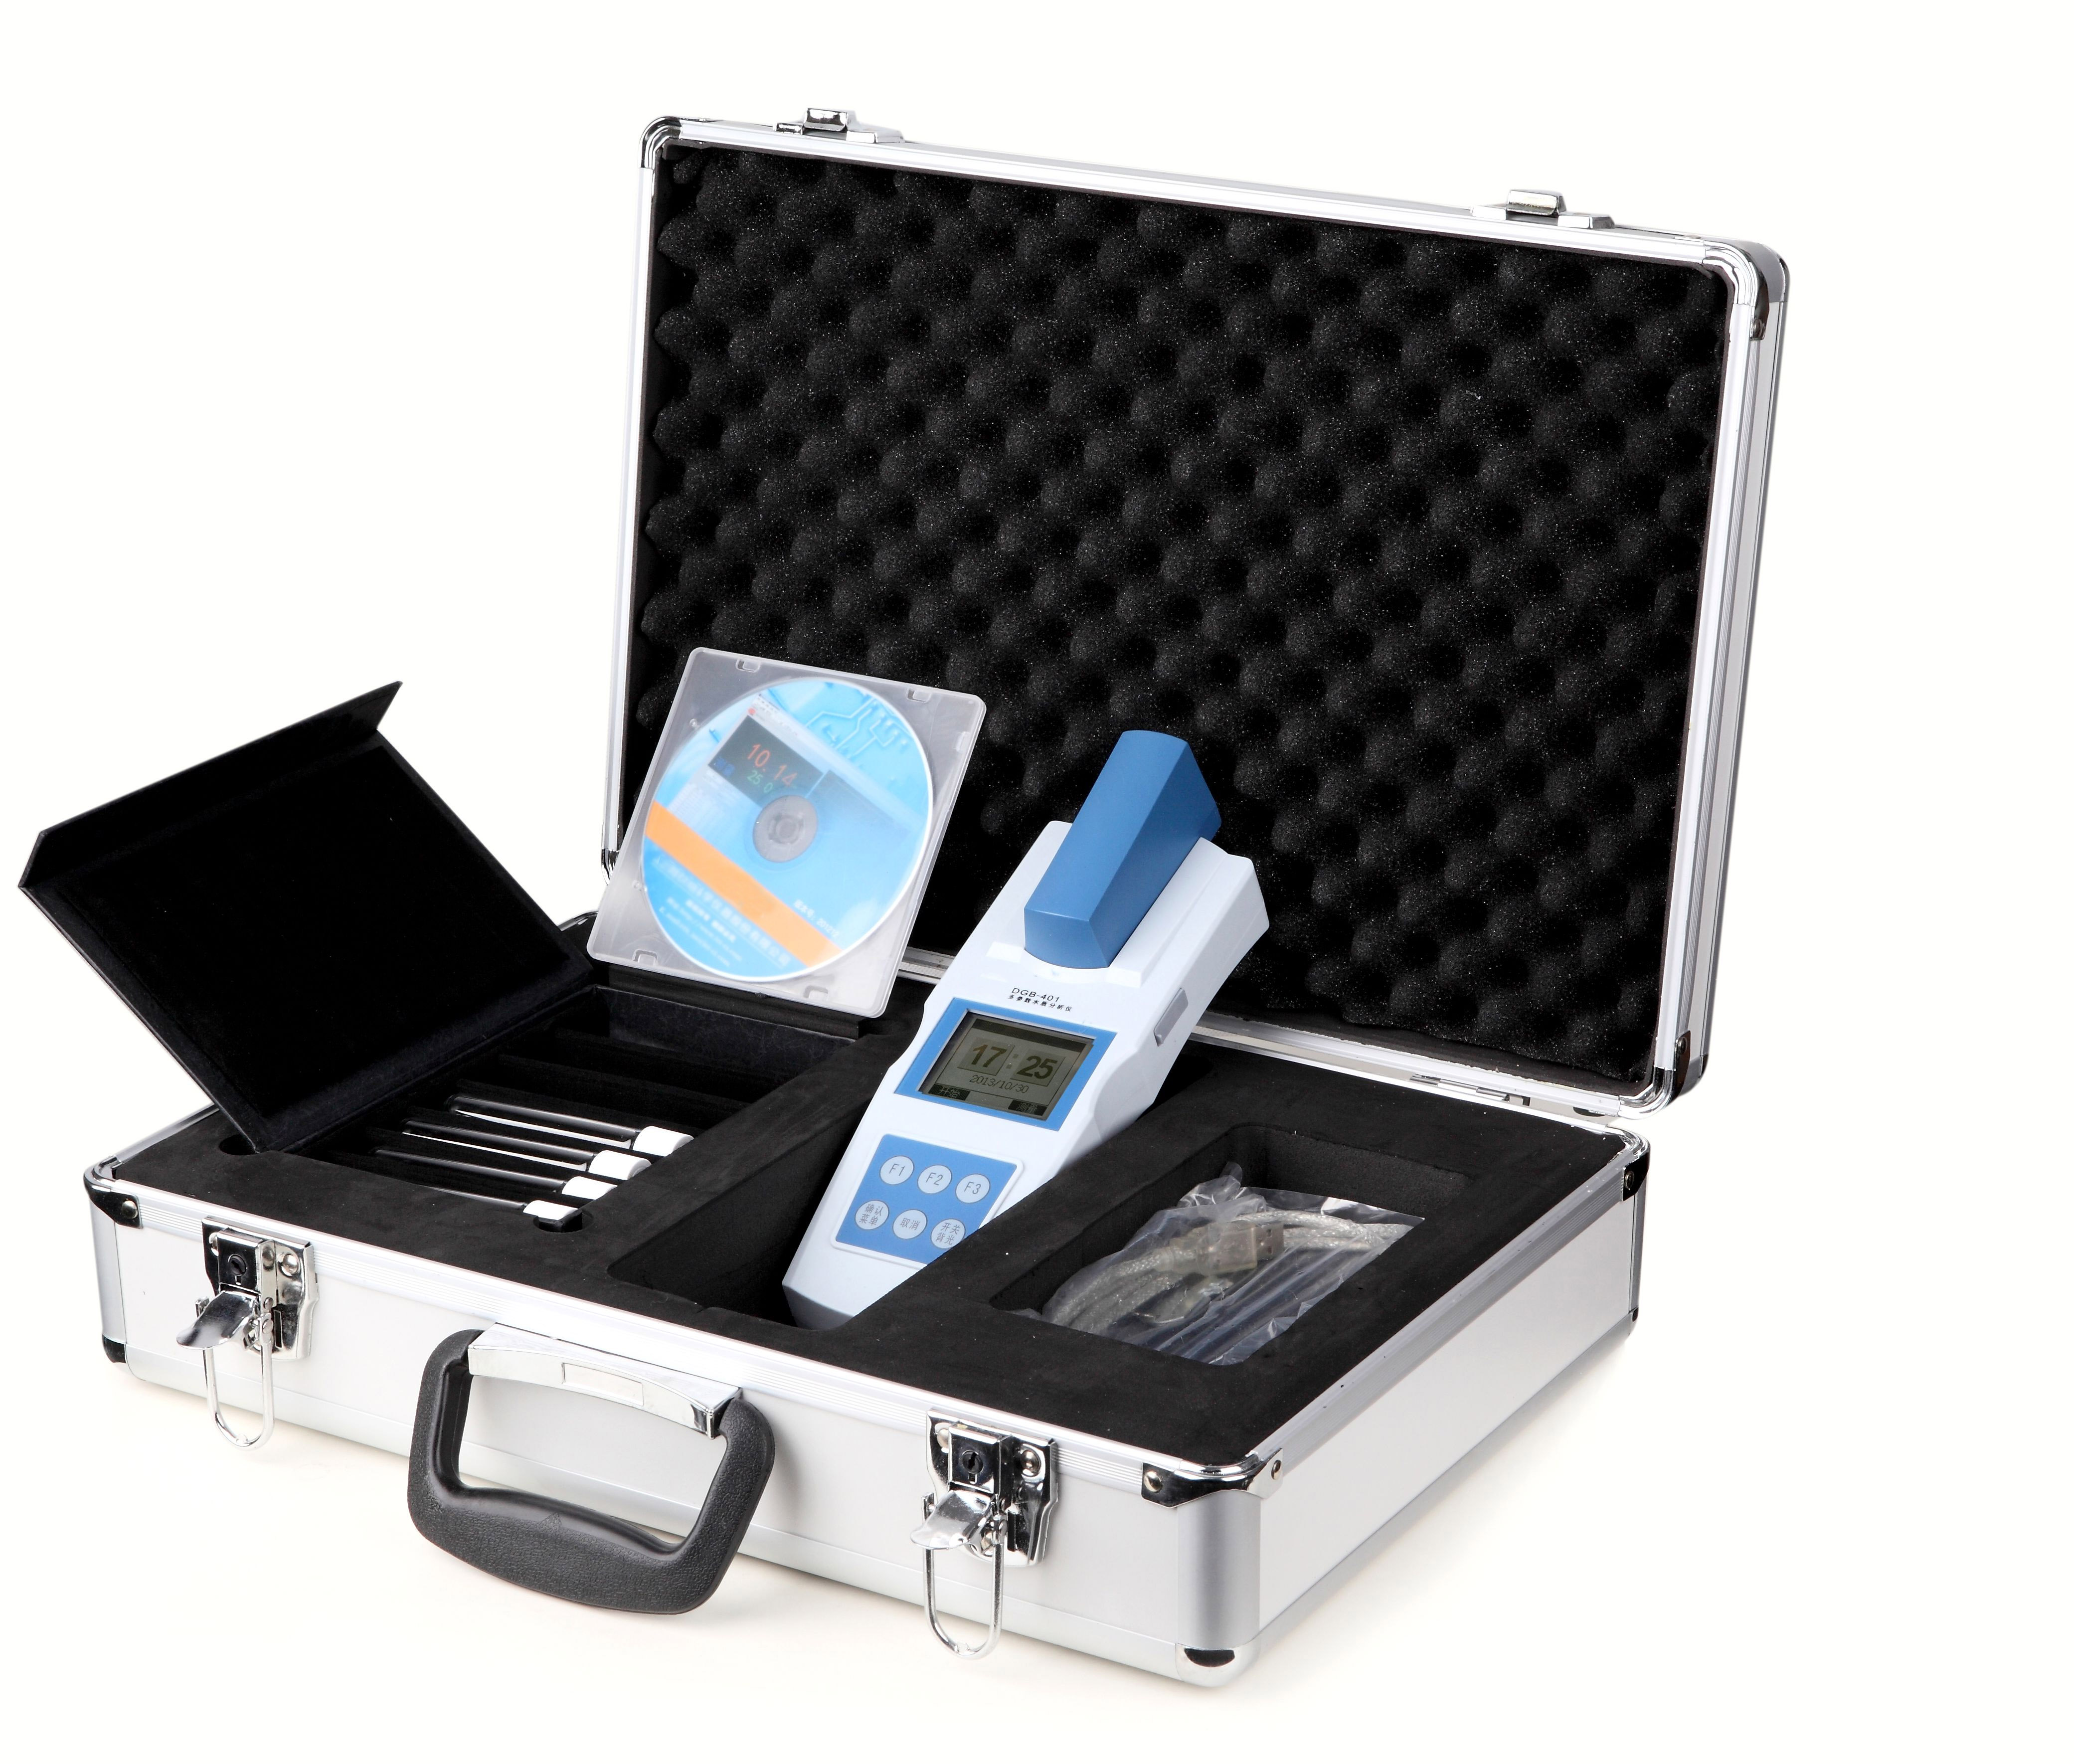 NADE DGB-401 spectrophotometric method Portable Multi parameter Water Quality Analyzer